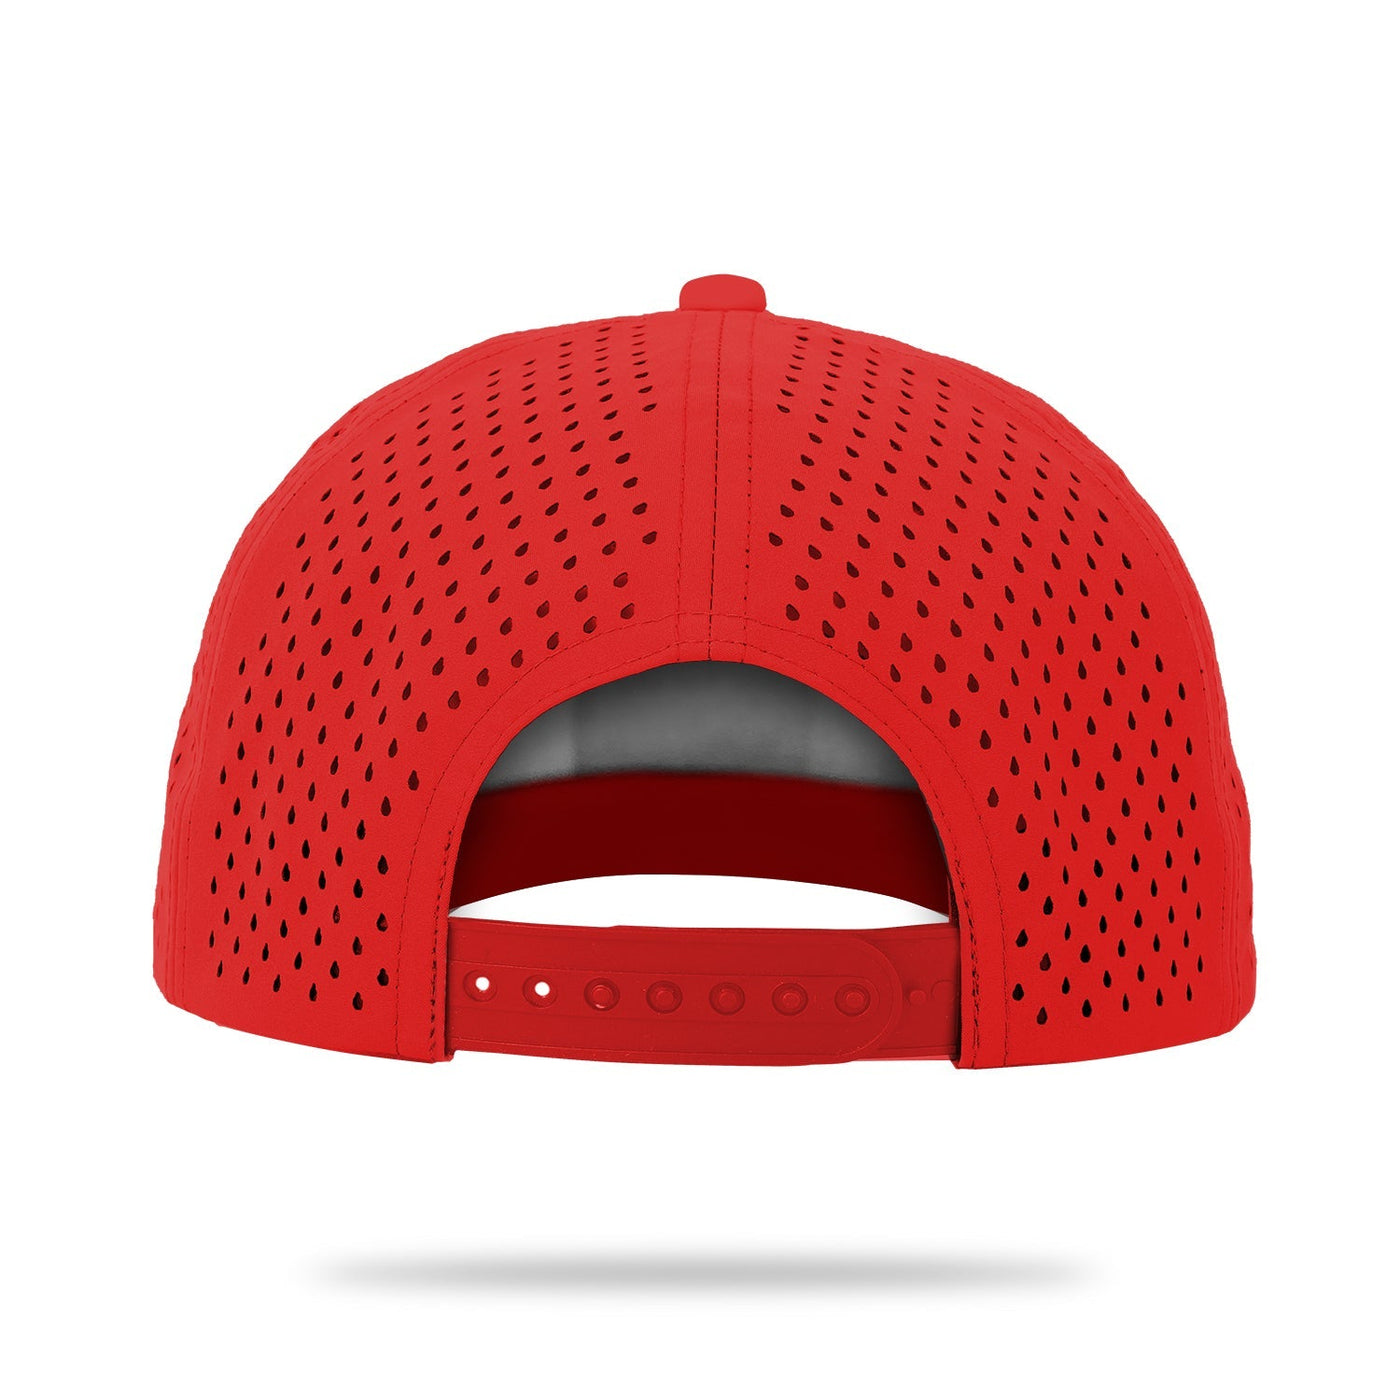 New York Performance Hat - Red